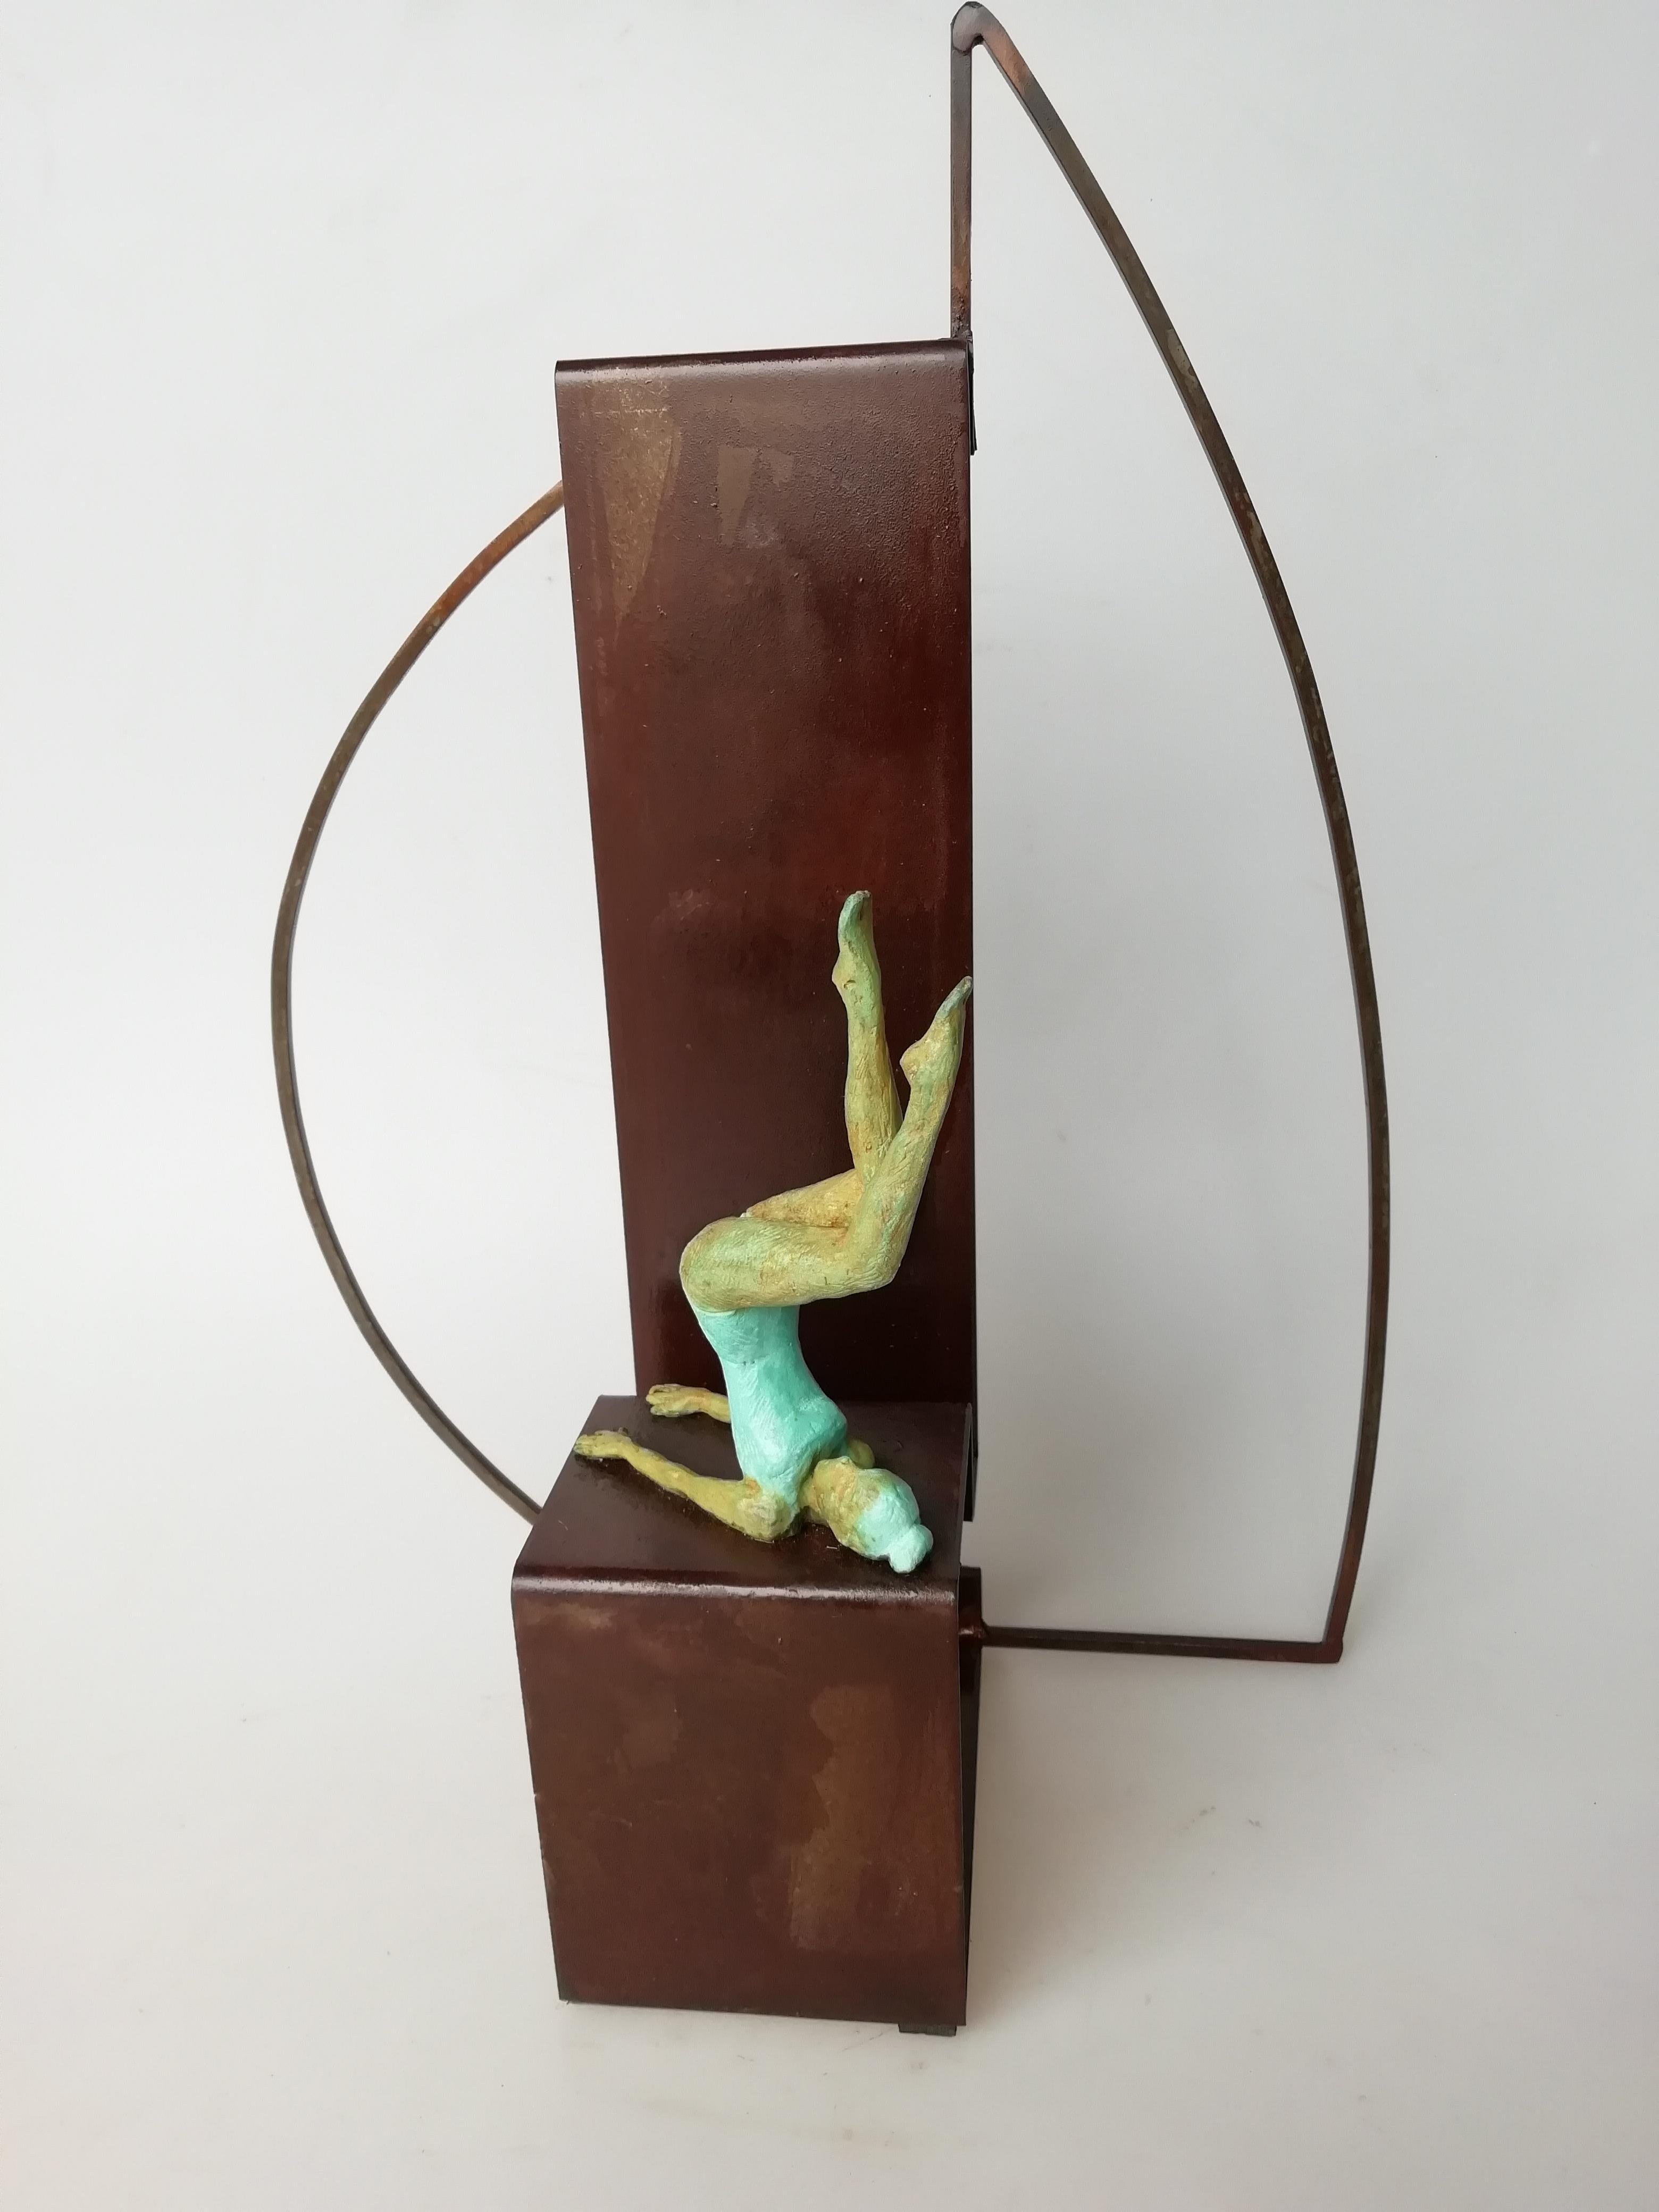 Joan Artigas Planas Figurative Sculpture - "Summer II" contemporary bronze table mural sculpture figurative girl relax yoga